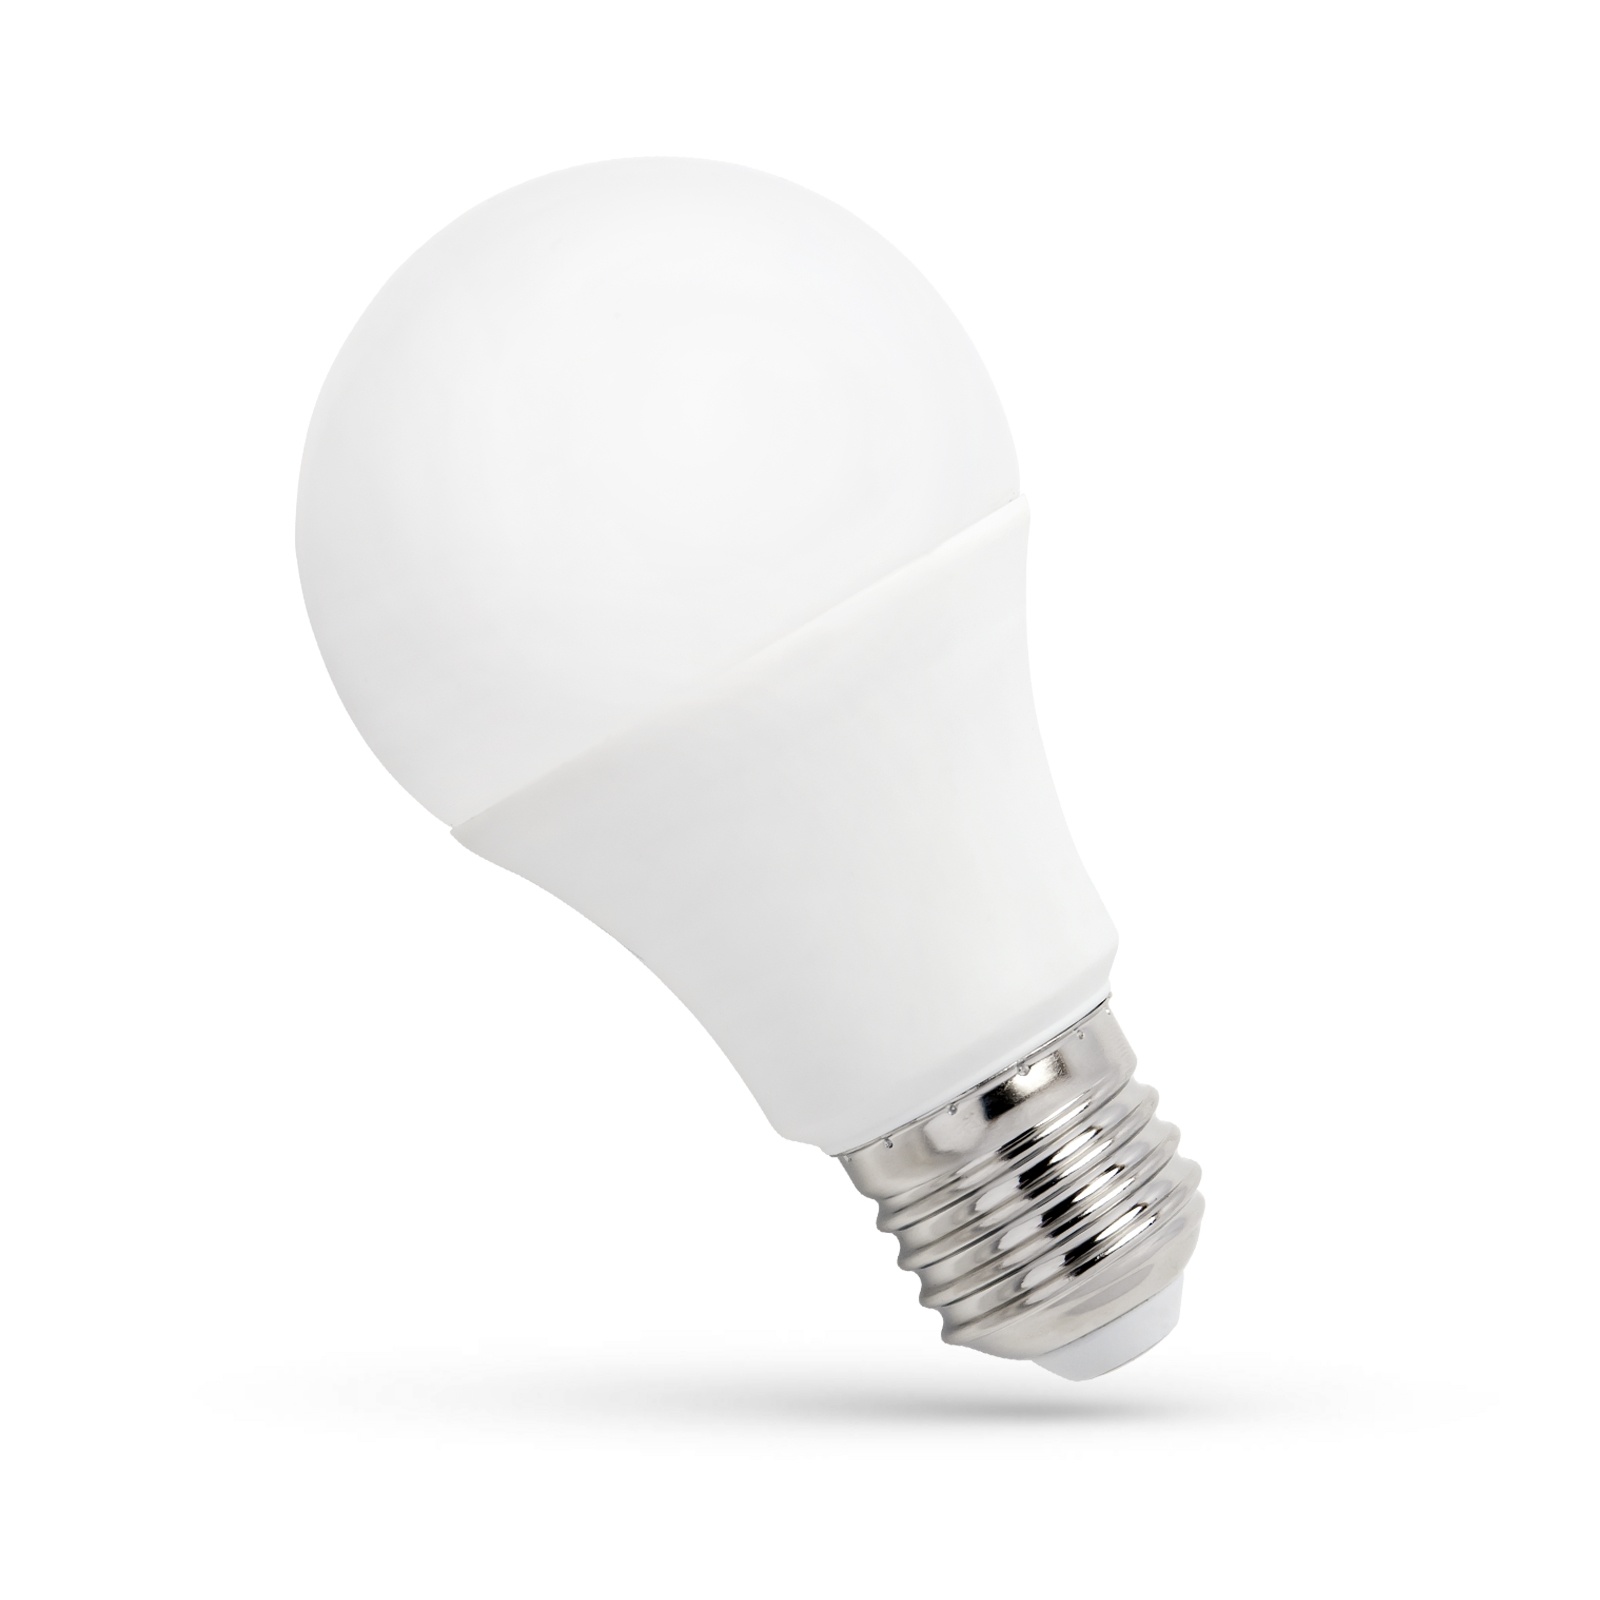 Lil Beenmerg Fraude LED Lamp E27 fitting - A60 - 3000K warm wit licht - 5W vervangt 36W -  Ledpanelendiscounter.nl